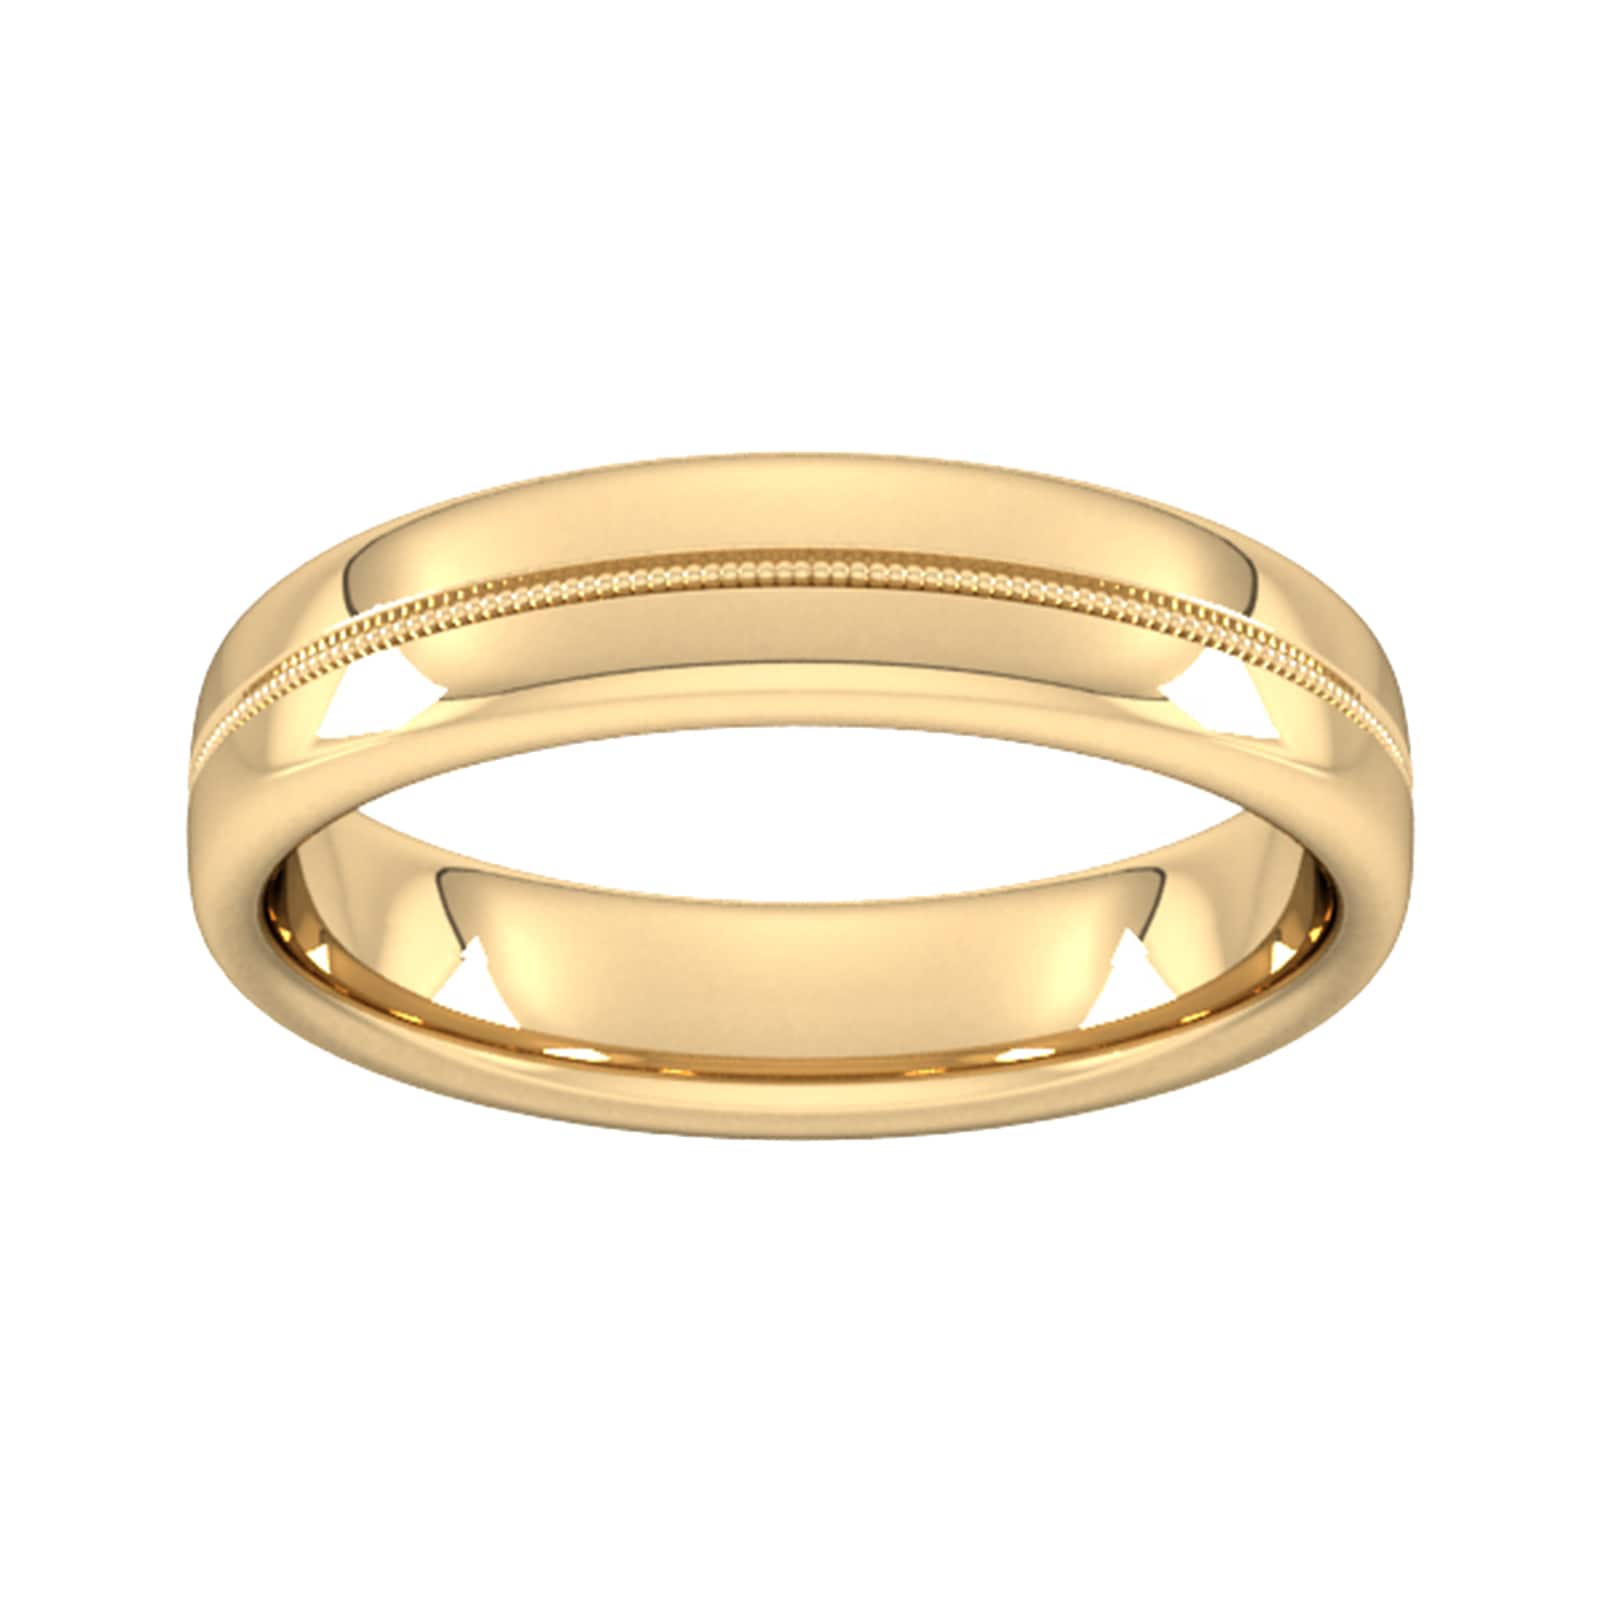 5mm Slight Court Standard Milgrain Centre Wedding Ring In 9 Carat Yellow Gold - Ring Size N